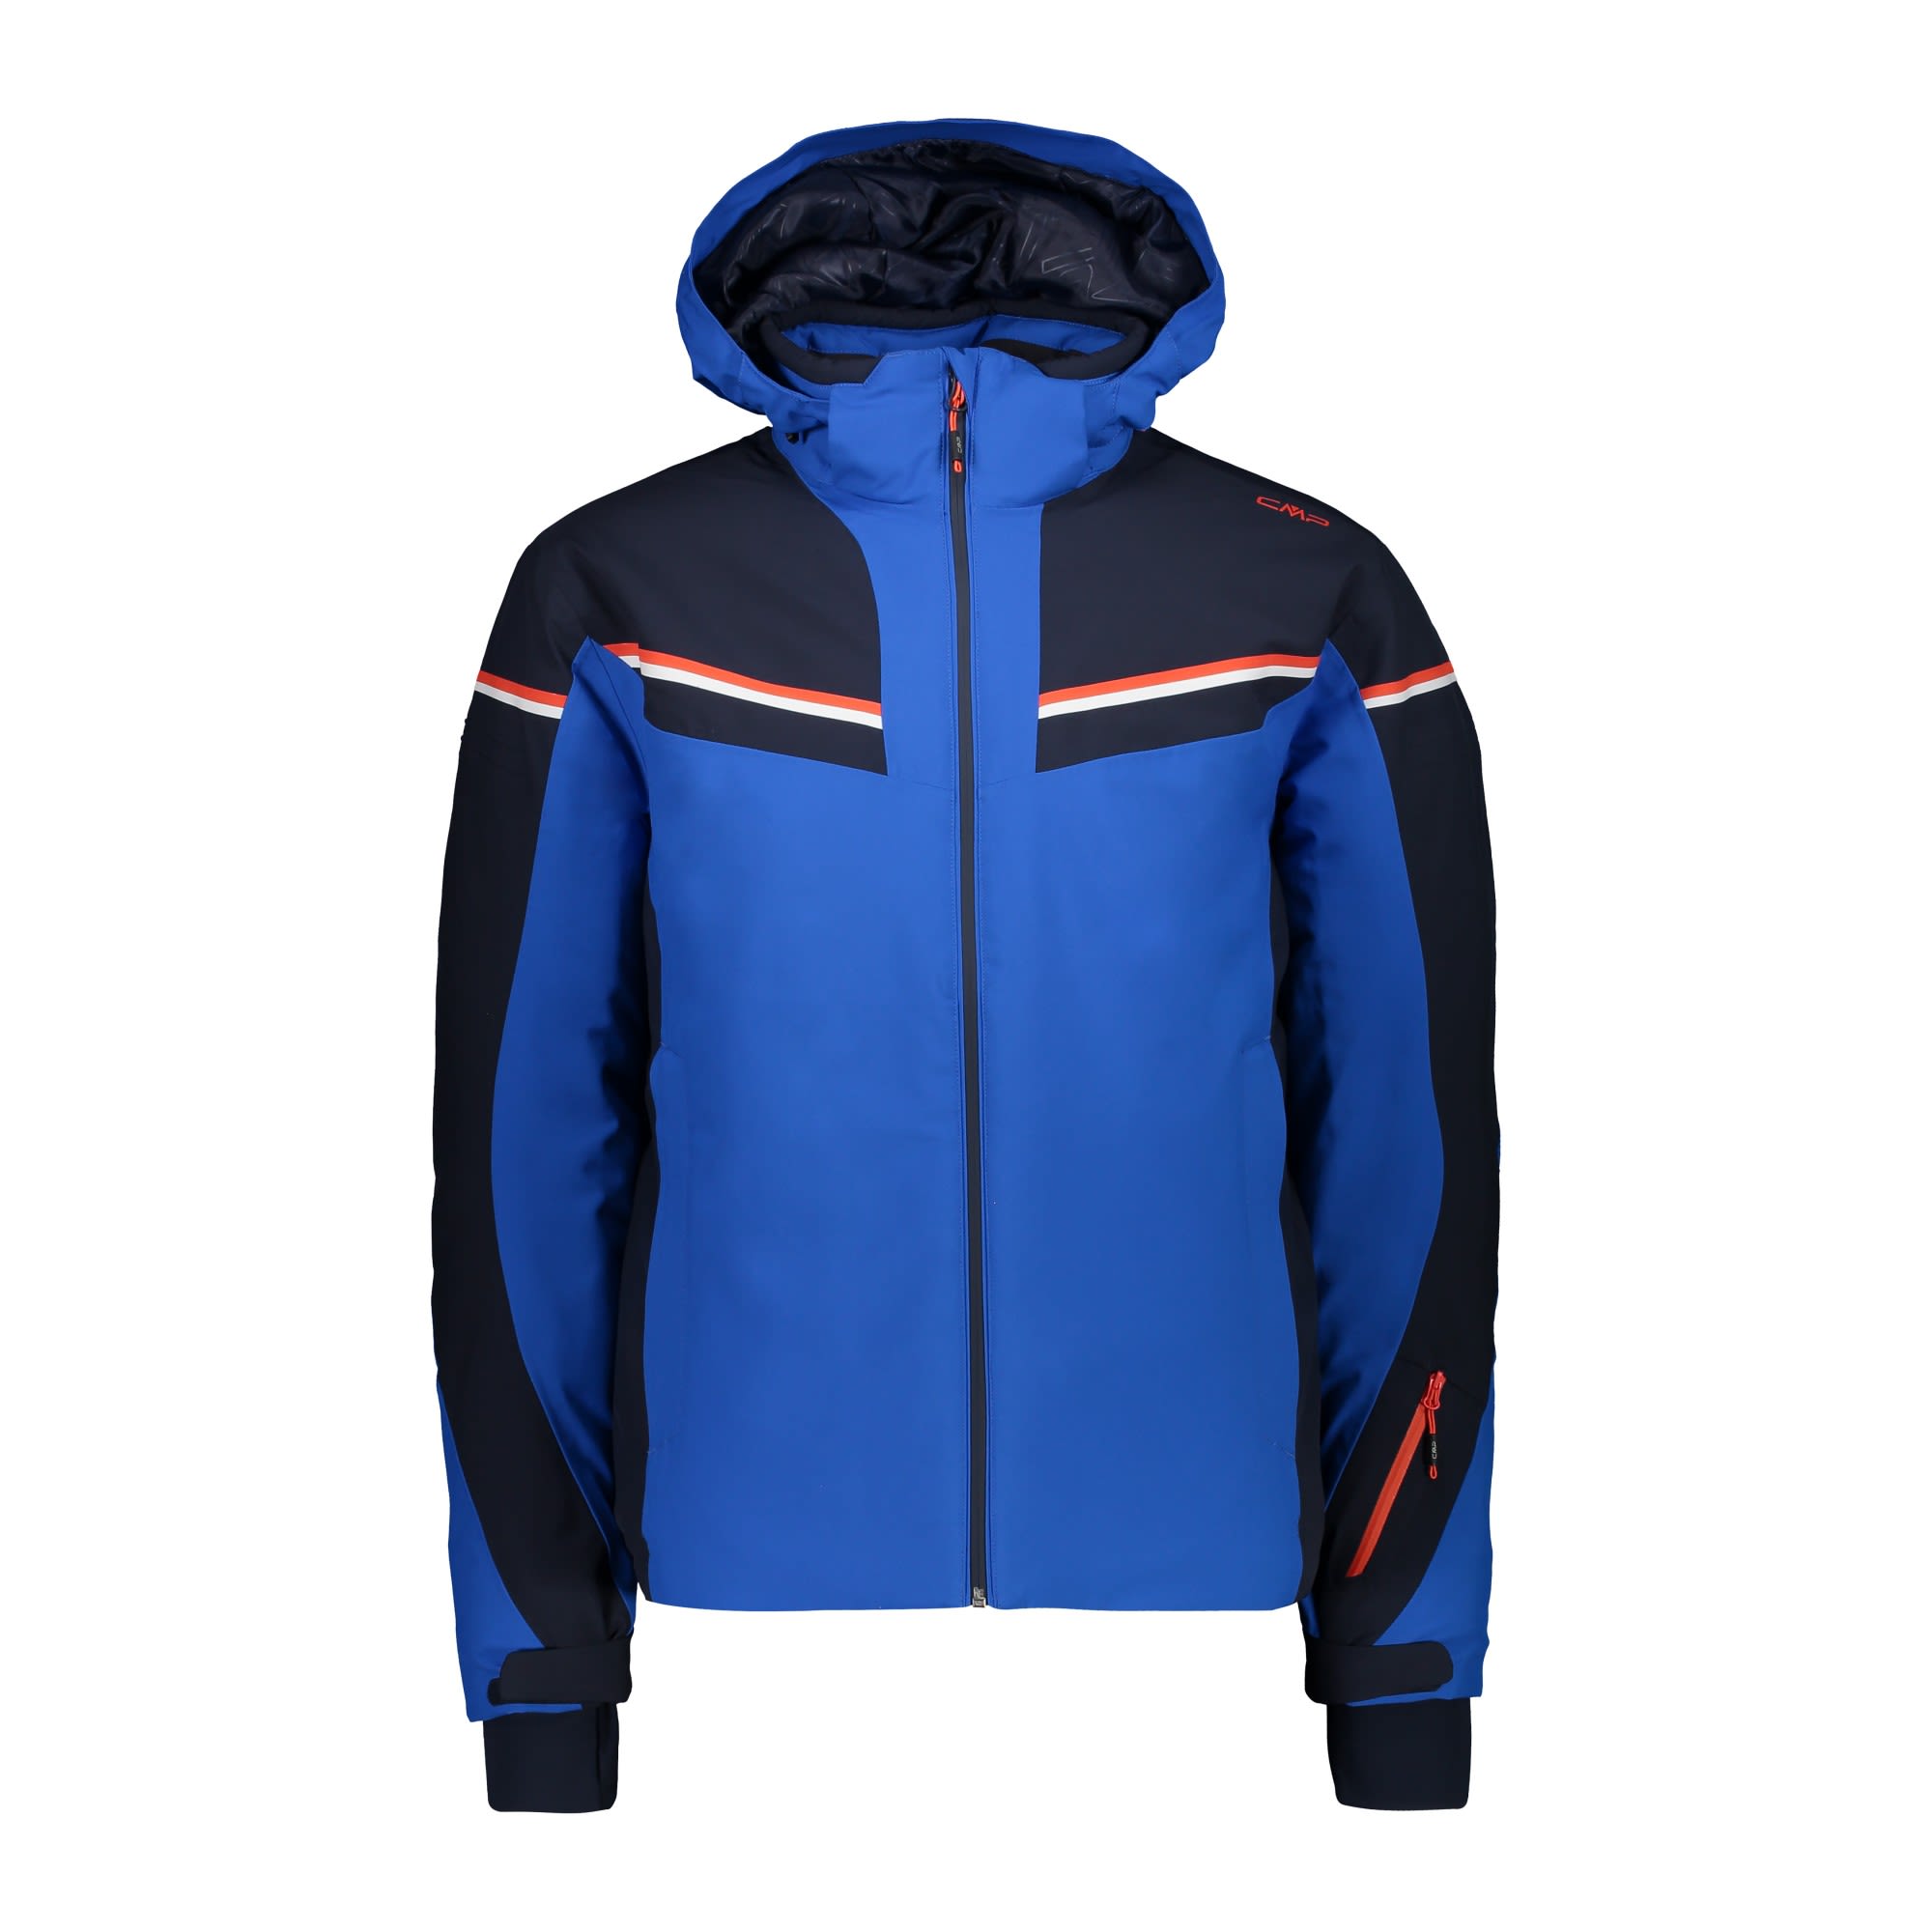 Cmp M Jacket Zip Hood Stripes Blau / Schwarz | Größe 58 | Herren Regenjacke